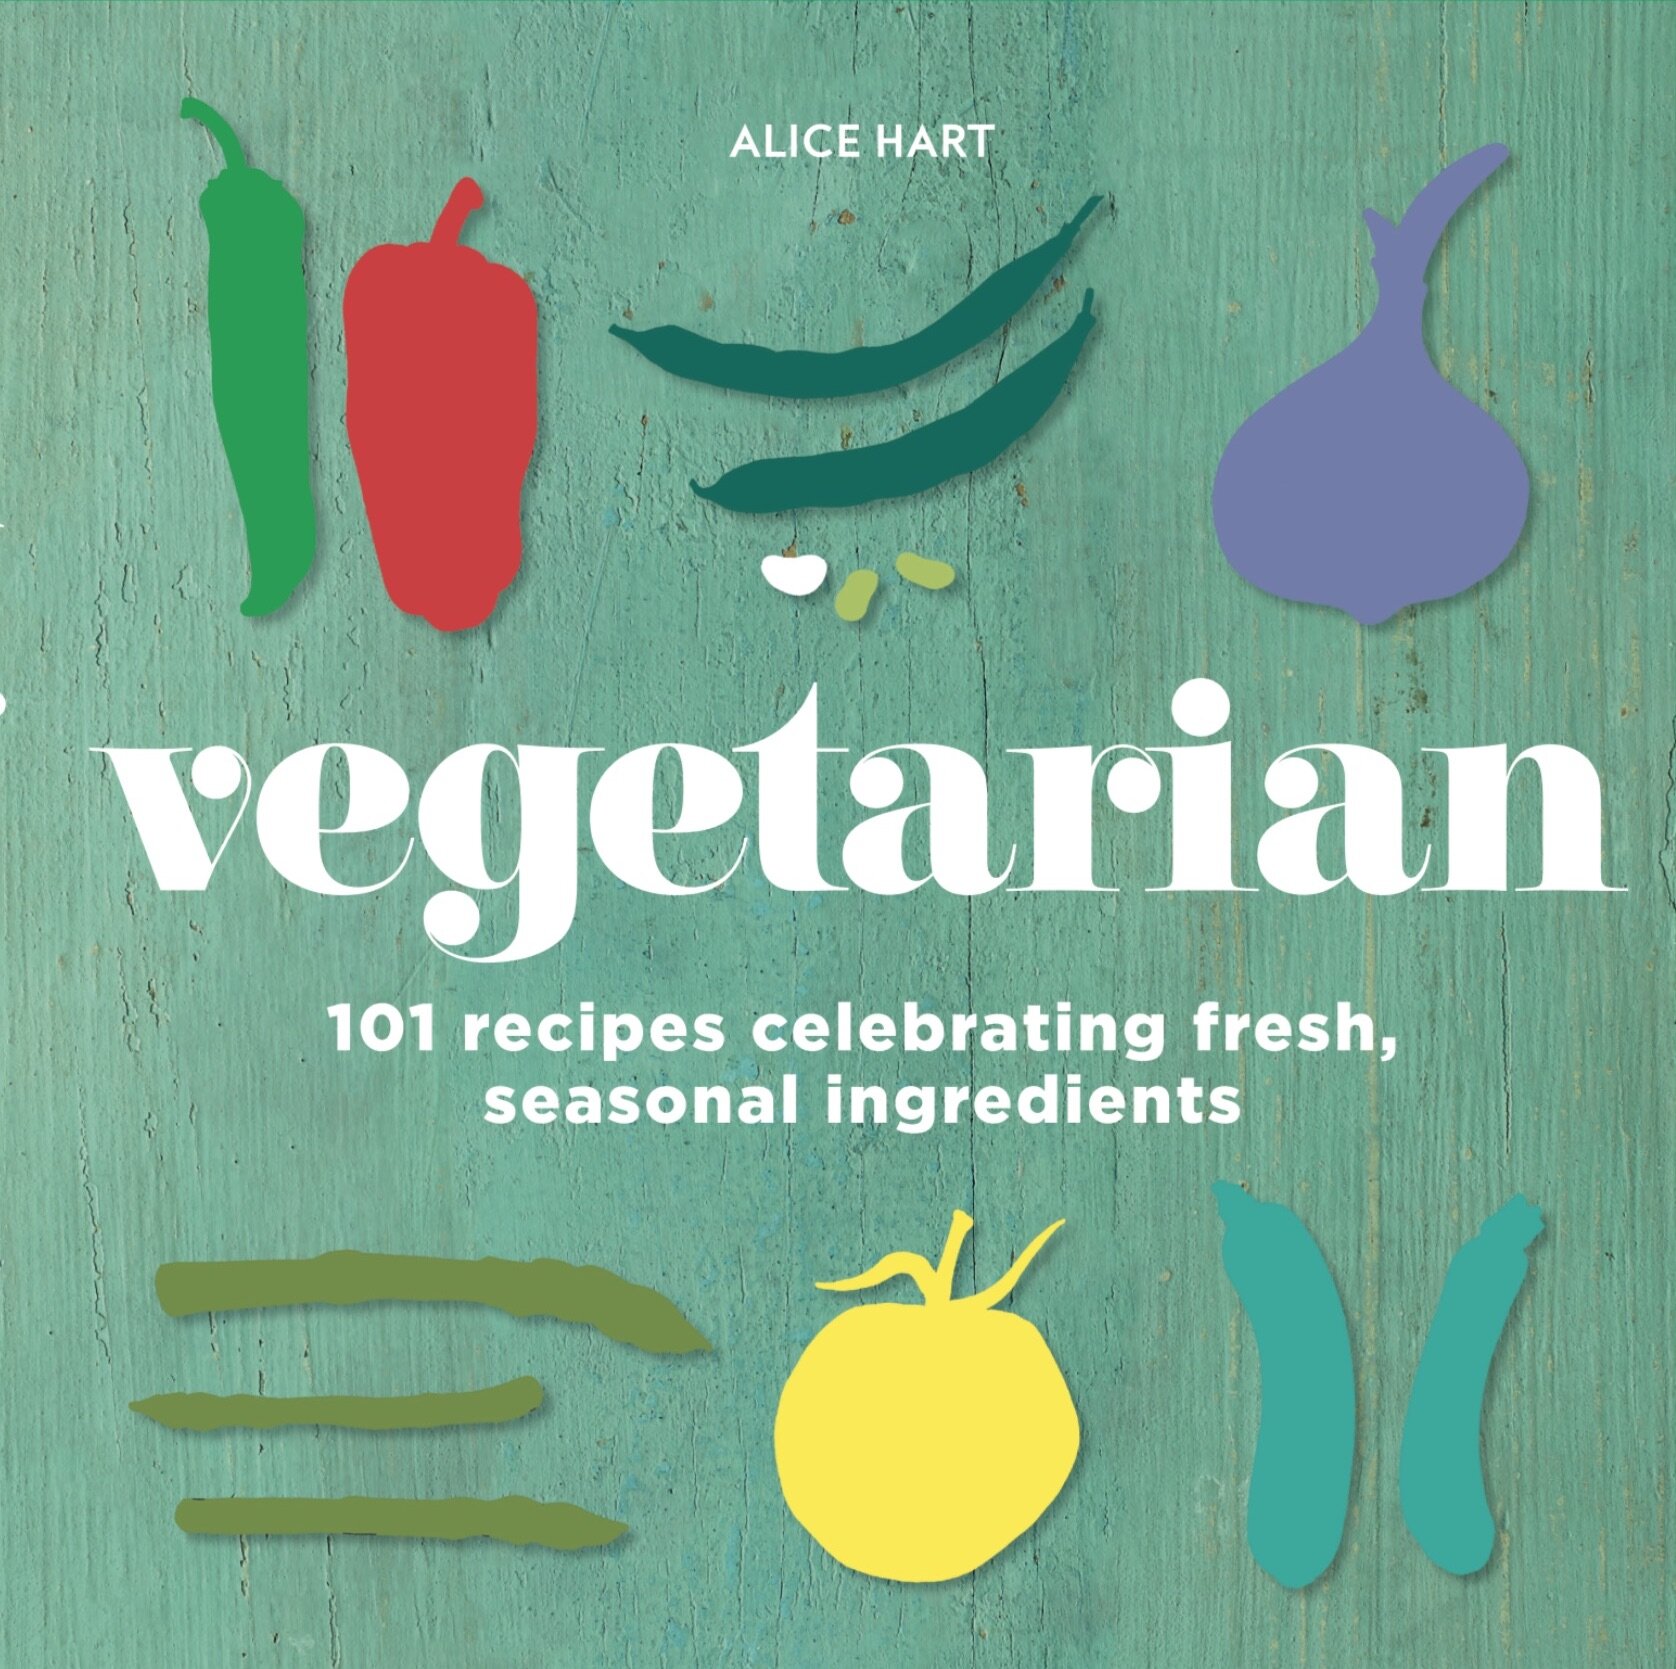 Vegetarian by Alice Hart